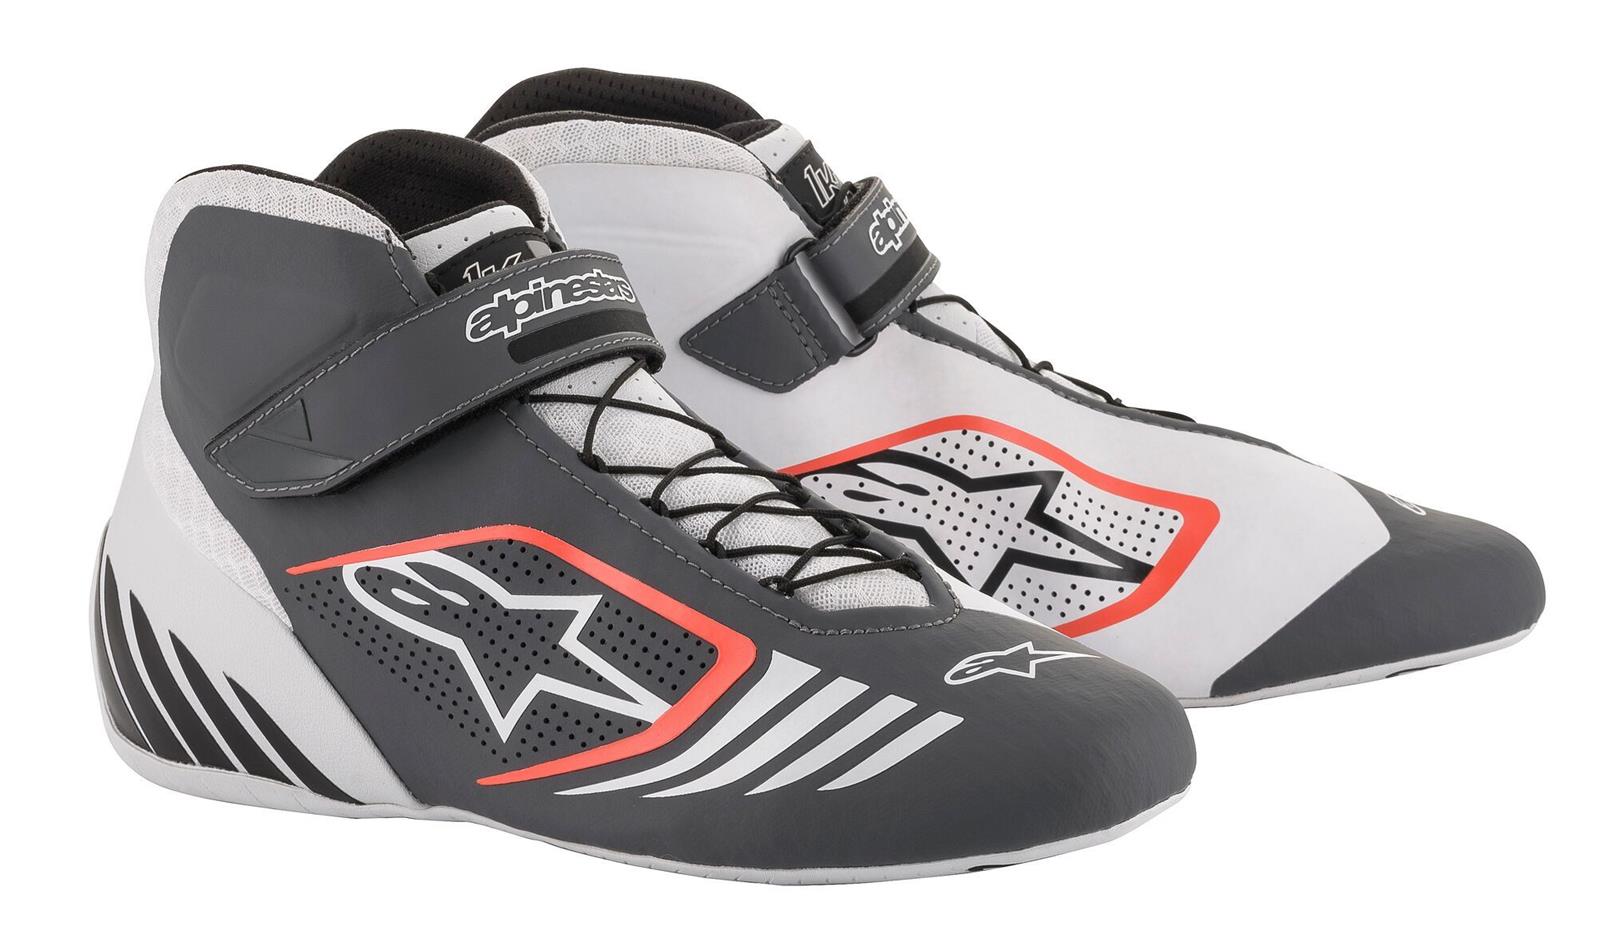 Alpinestars TECH-1 KX ботинки для картинга, серый/красный, р-р 38(EUR)/6(US)/5(UK). DARK-STOCK.RU